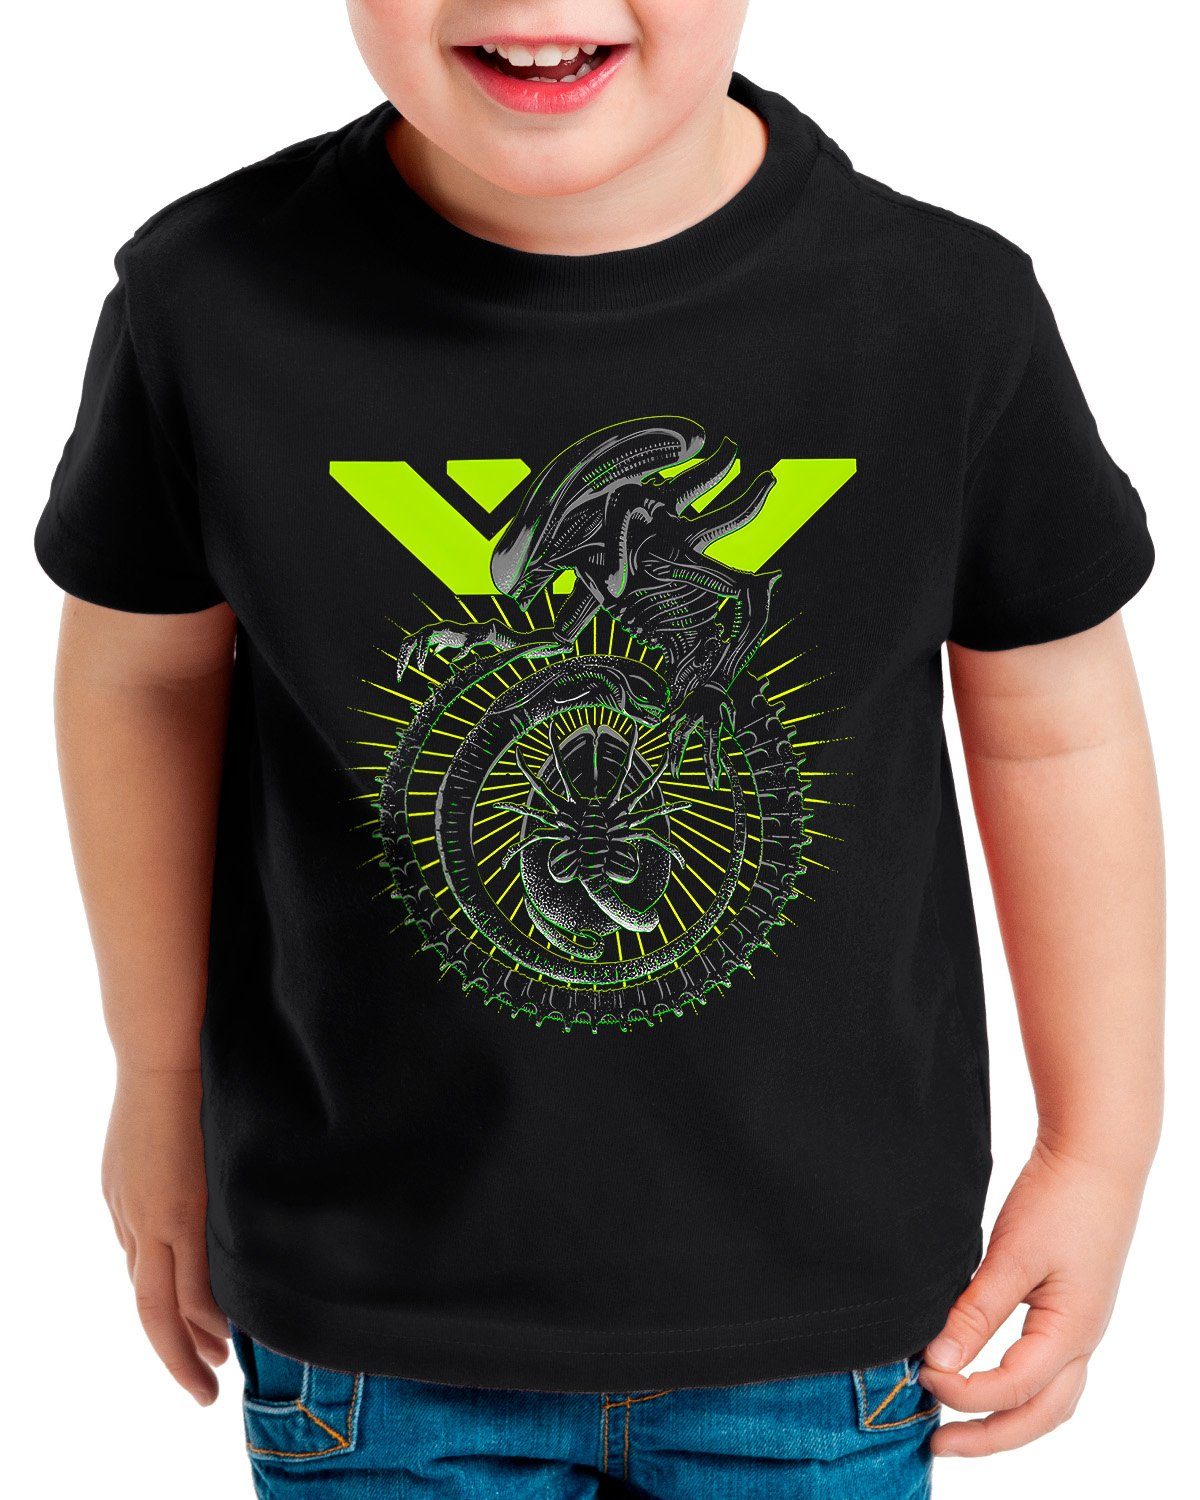 style3 Print-Shirt Kinder ridley Progress Xeno scott xenomorph predator alien T-Shirt